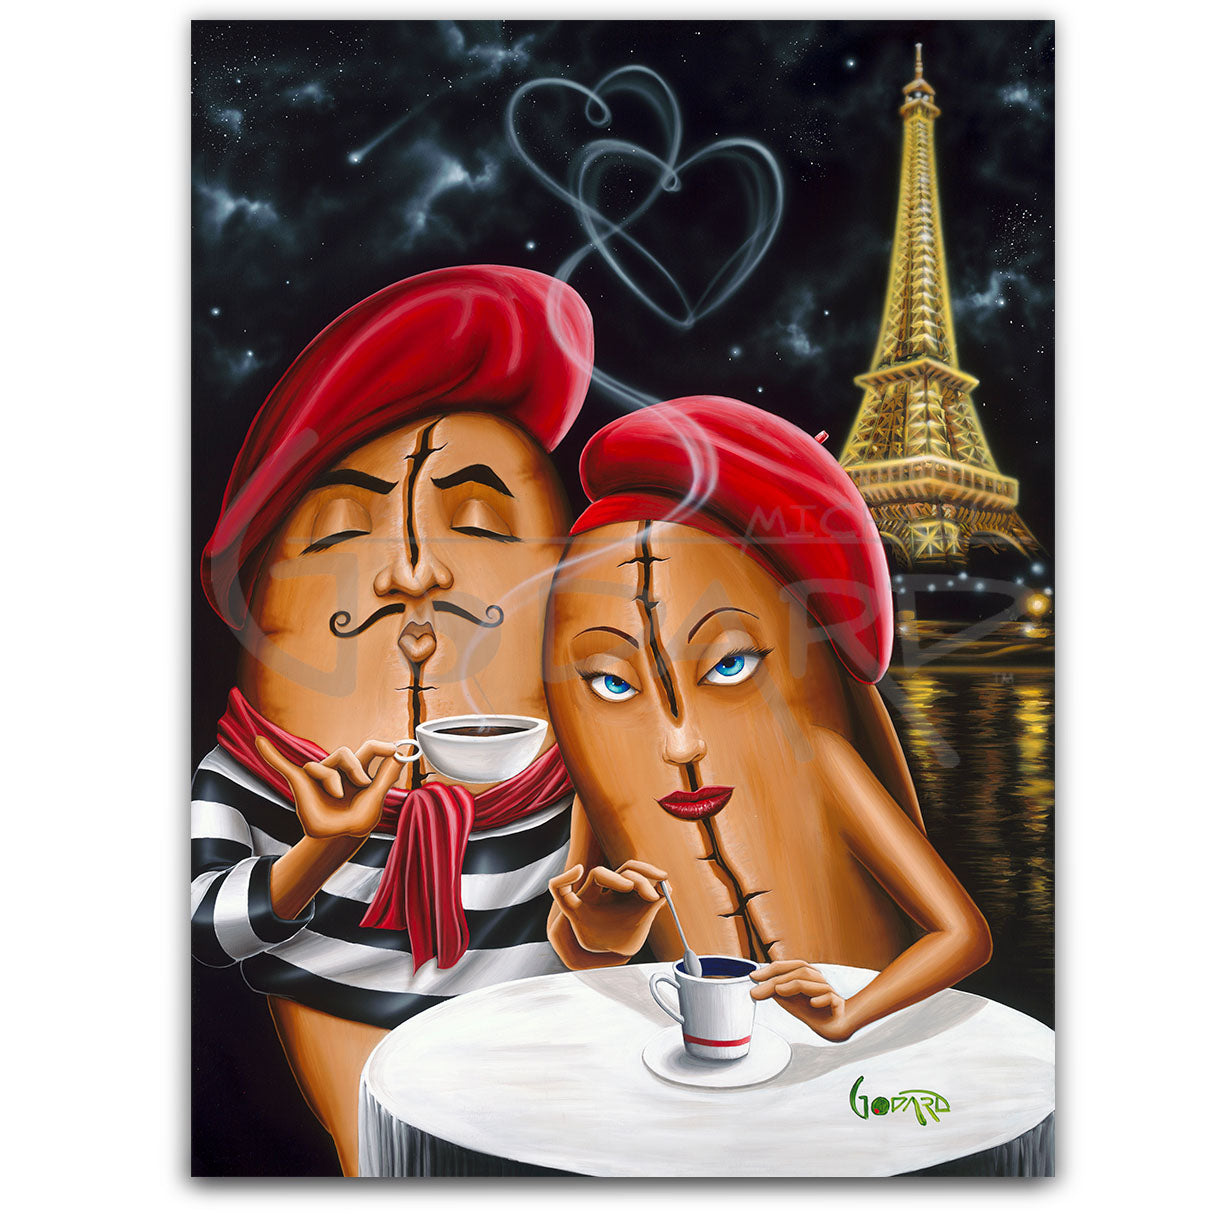 Michael Godard "French Roast Romance" Limited Edition Canvas Giclee